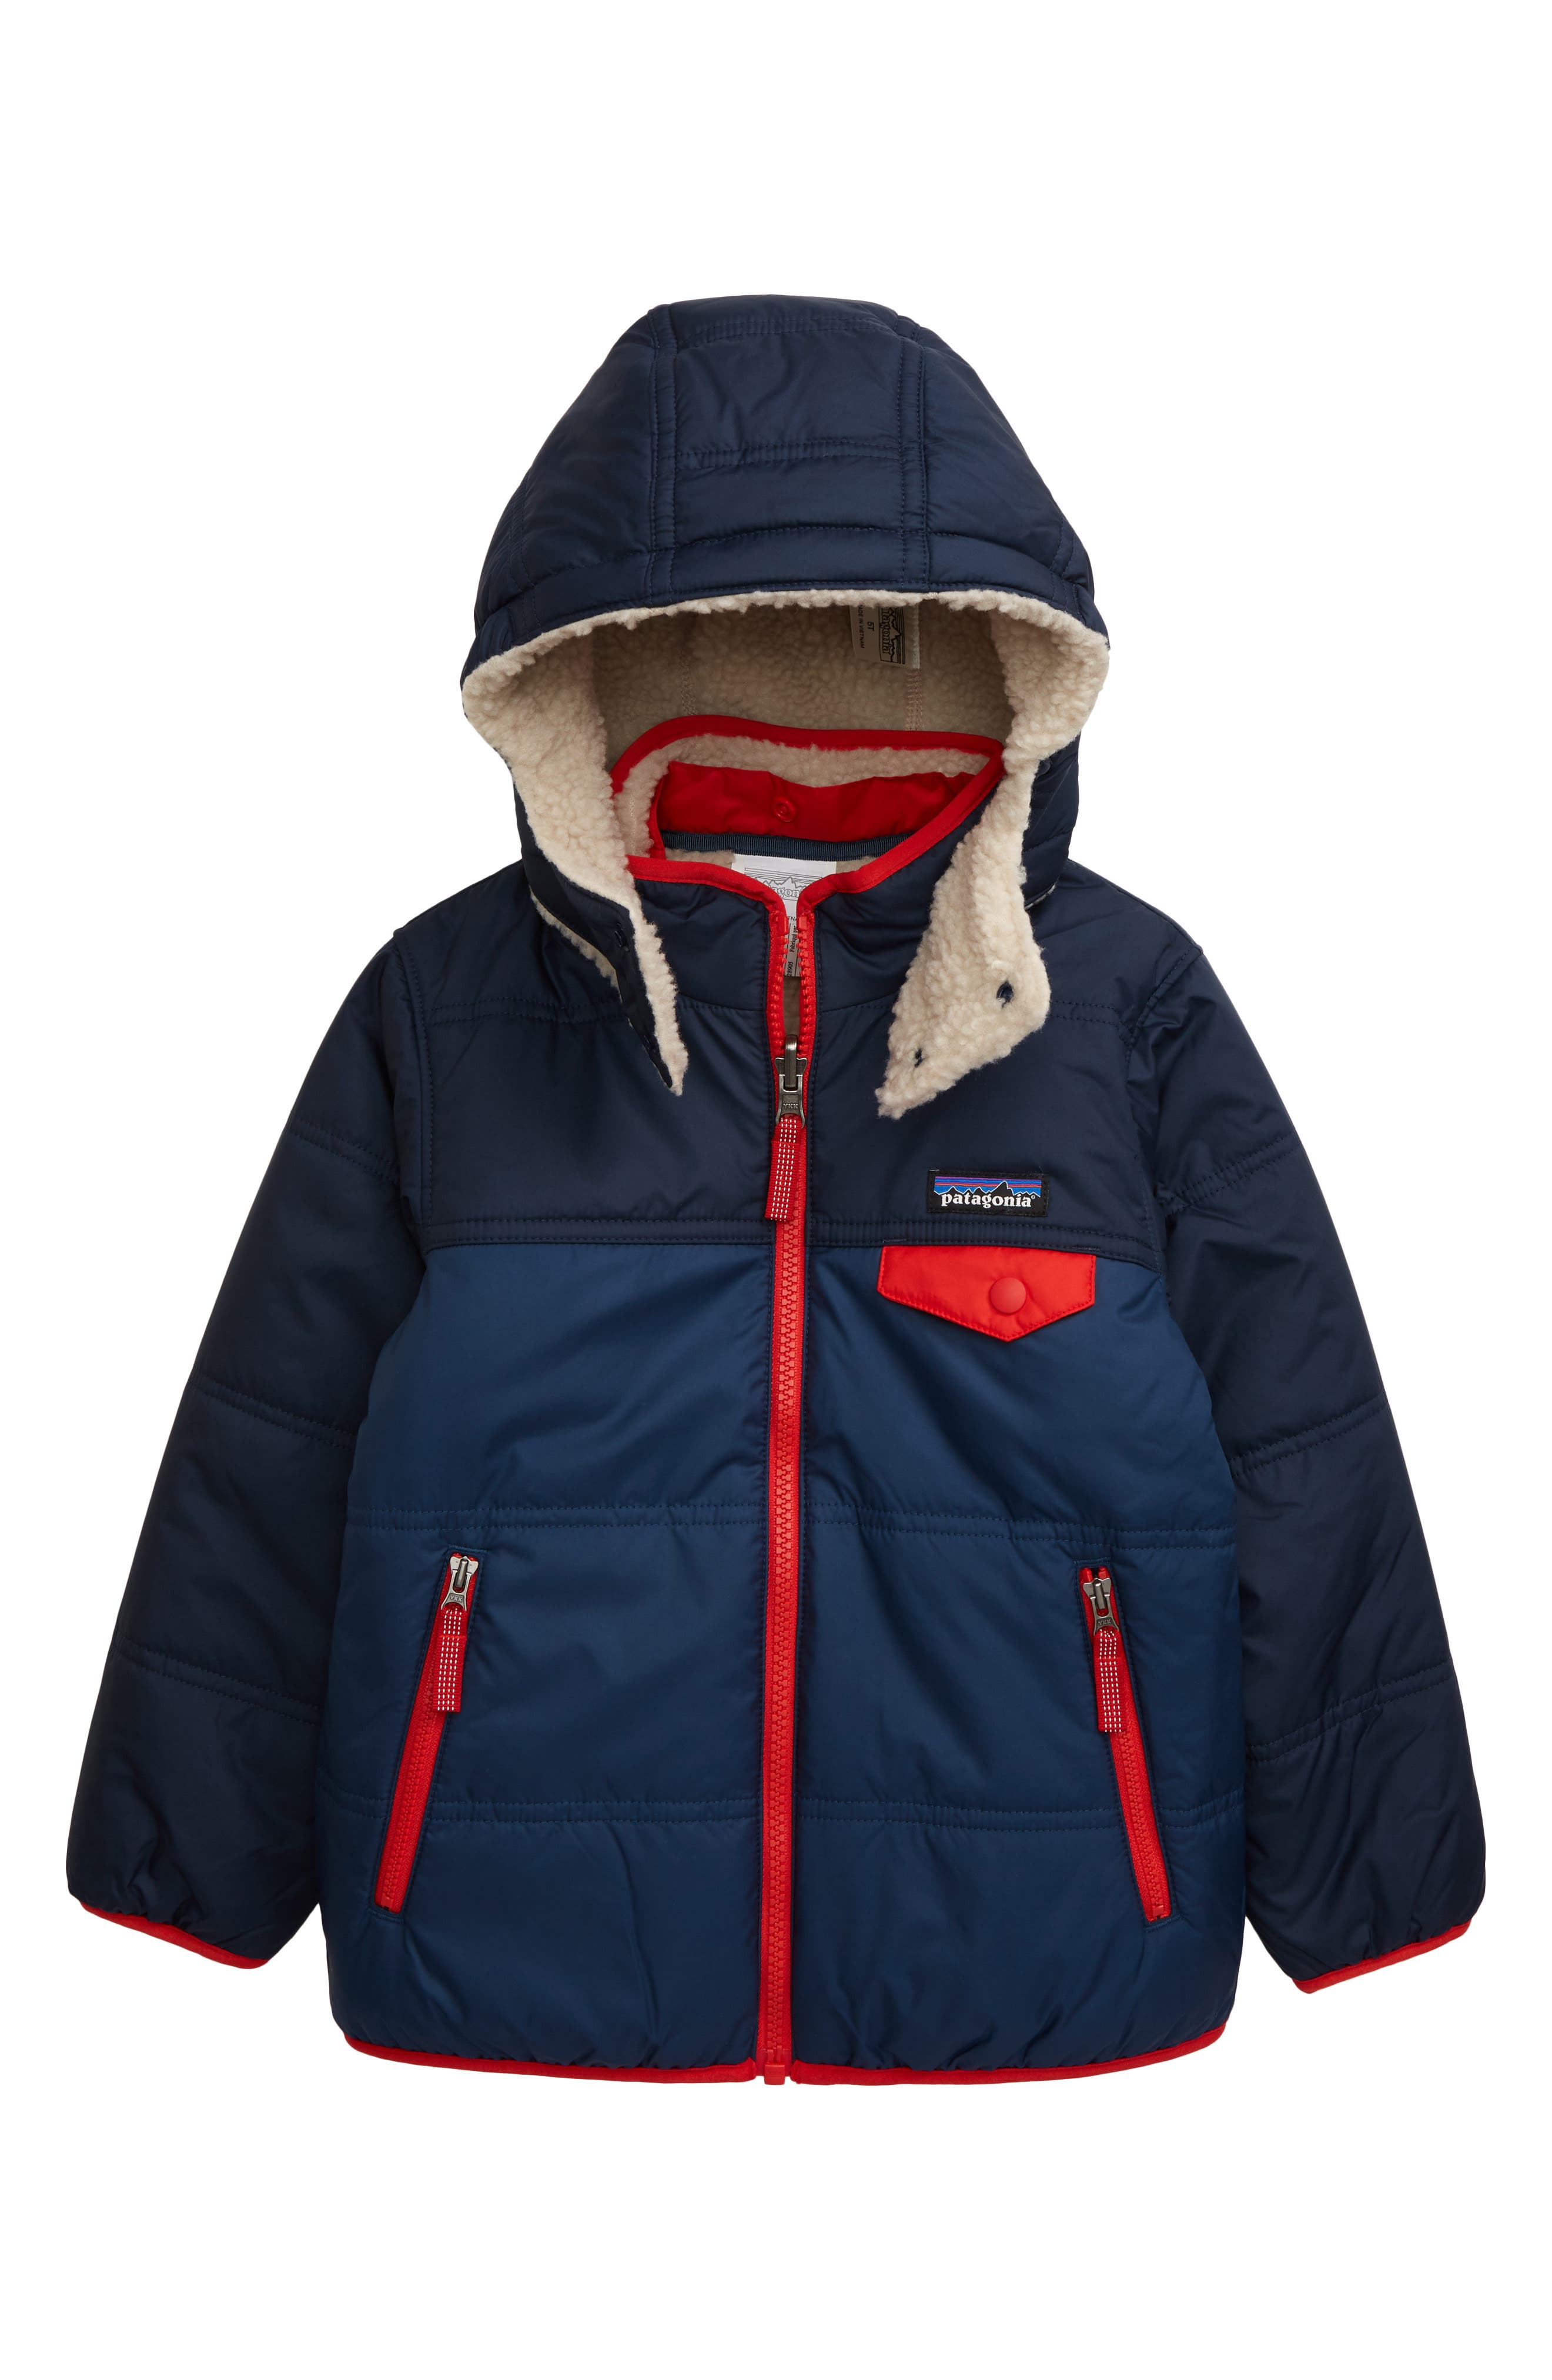 patagonia tribbles jacket 4t